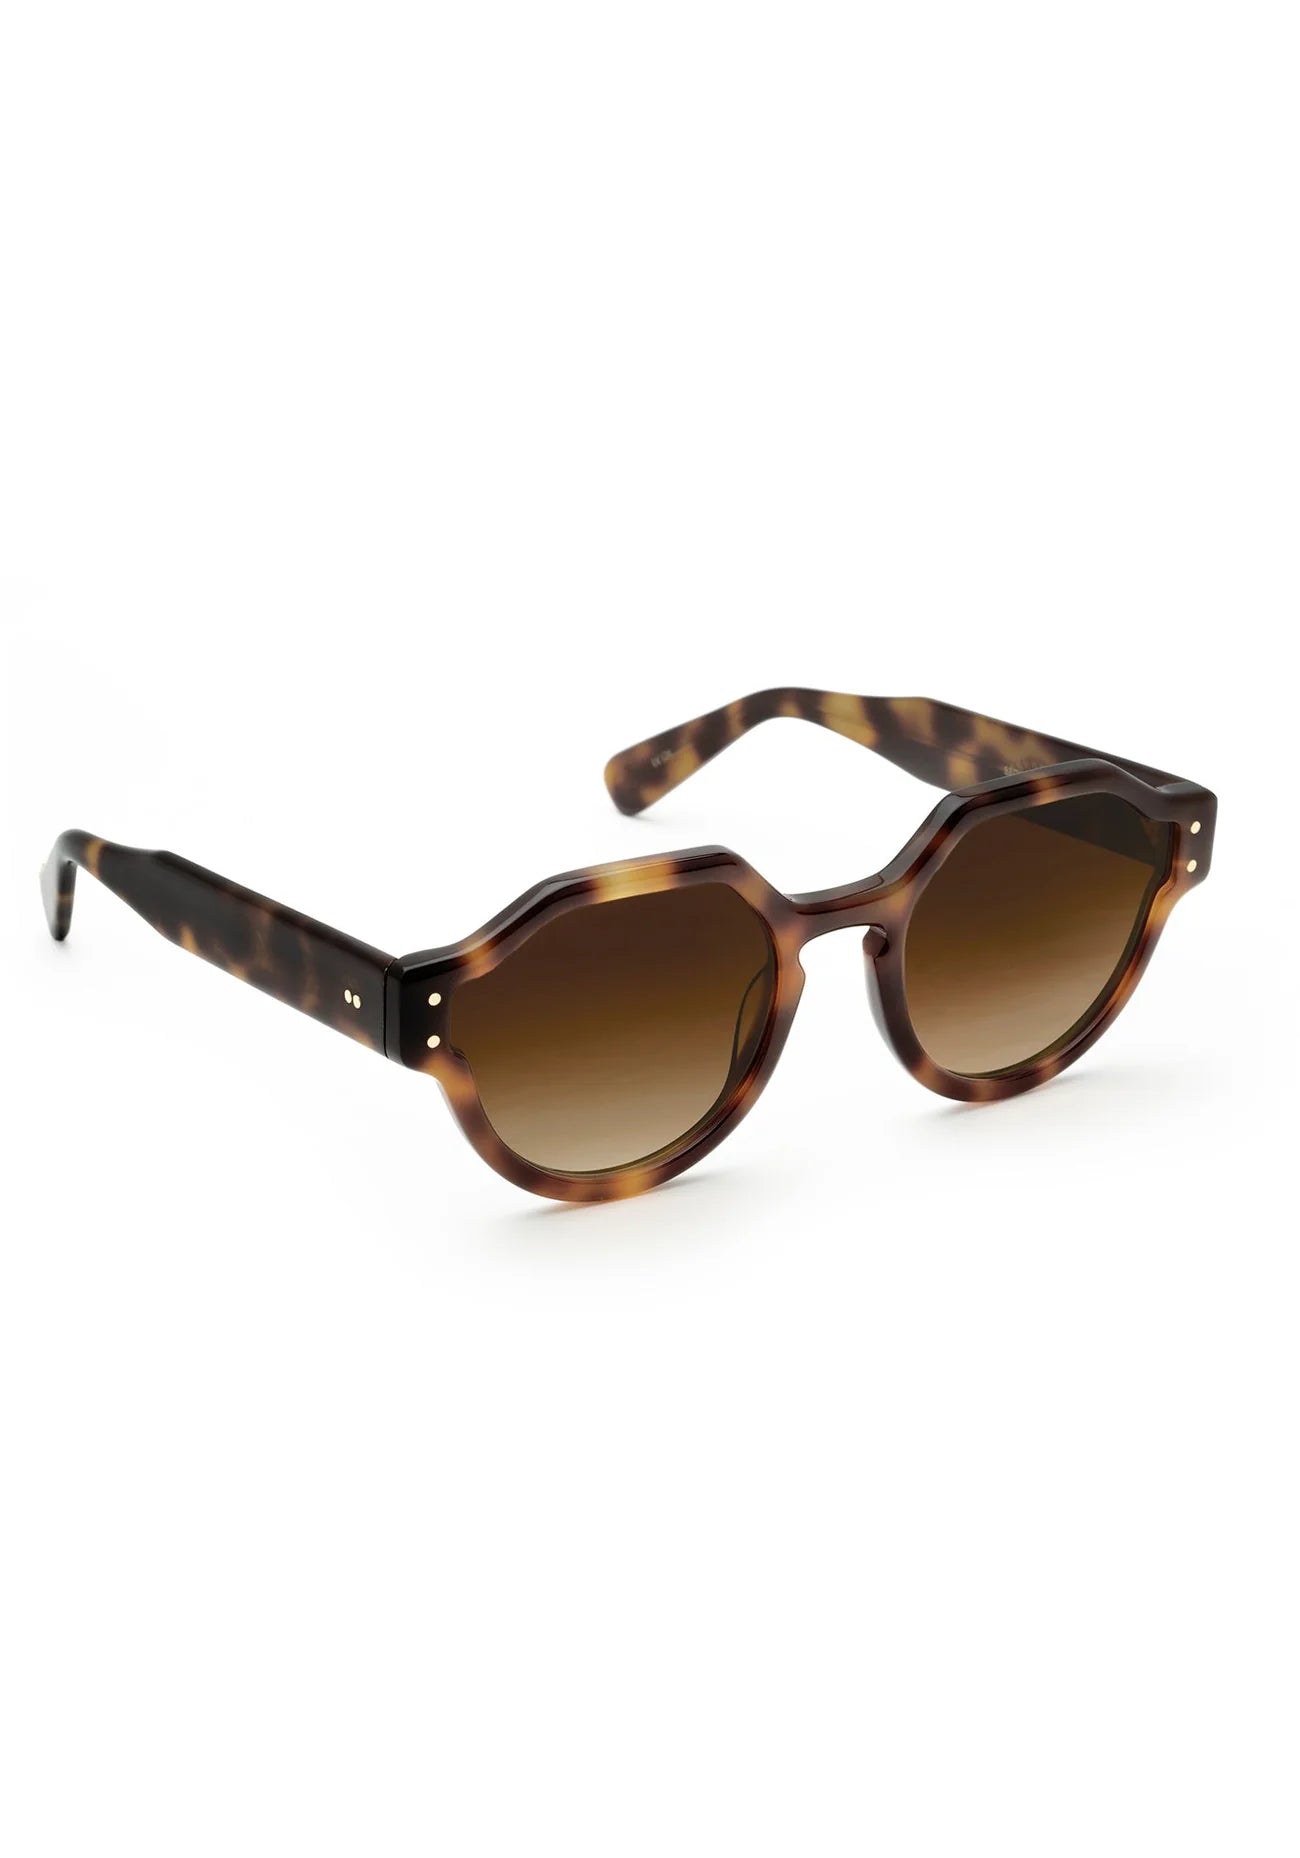 Astor Sunglasses